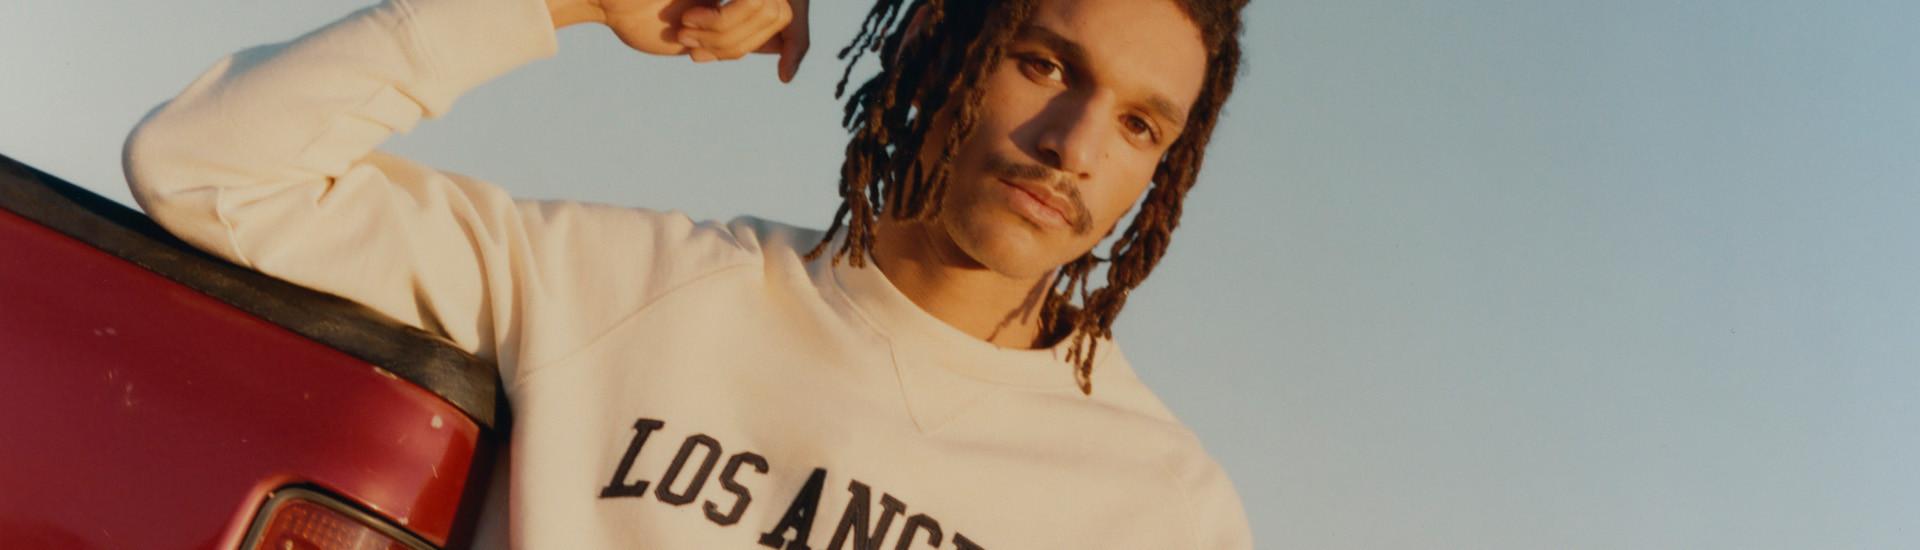 Image of man wearing cream sweatshirt with Los Angeles text